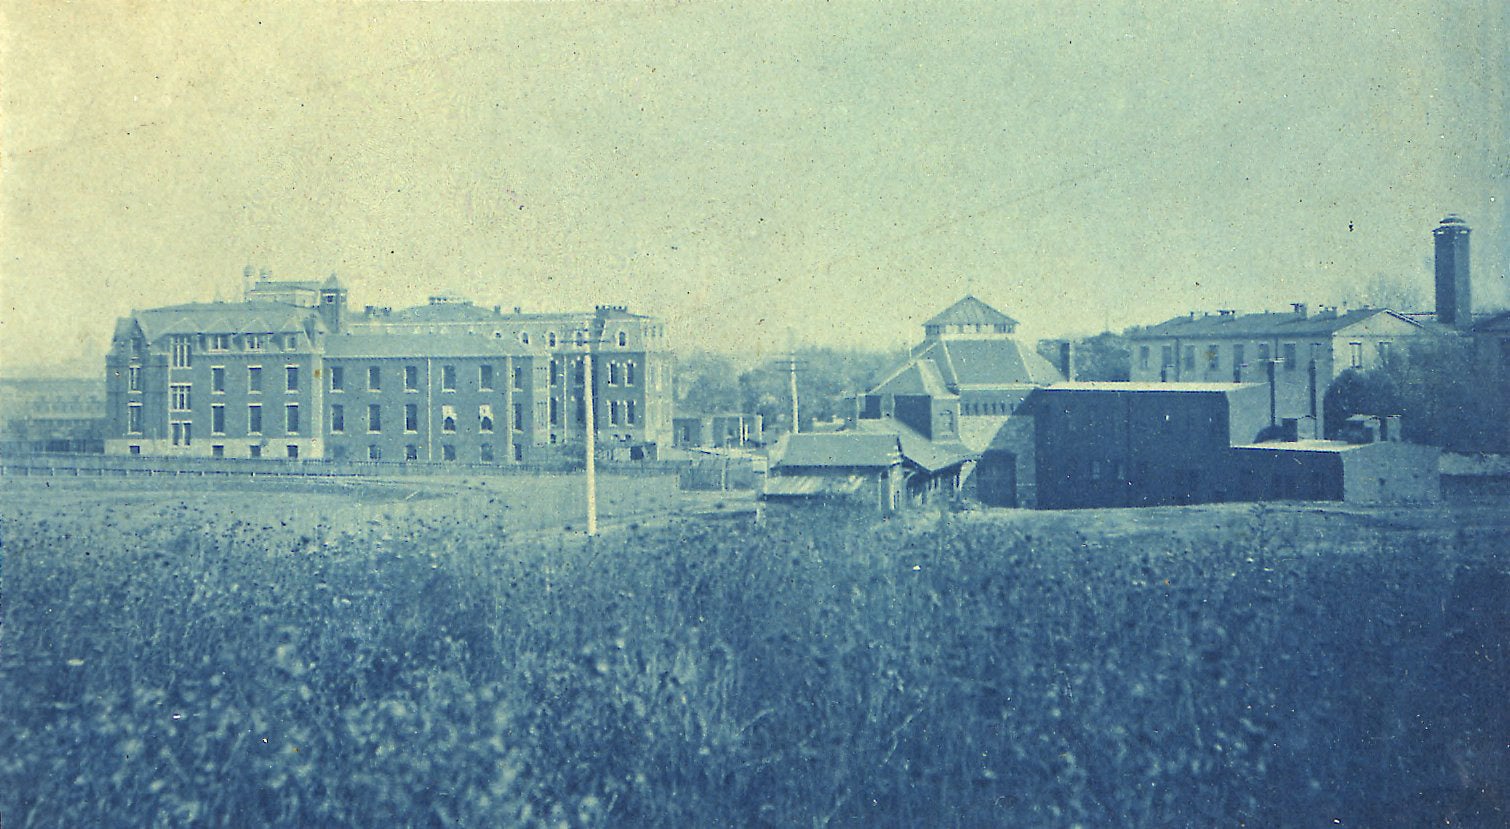 School of Veterinary Medicine and Veterinary Hospital, c. 1885